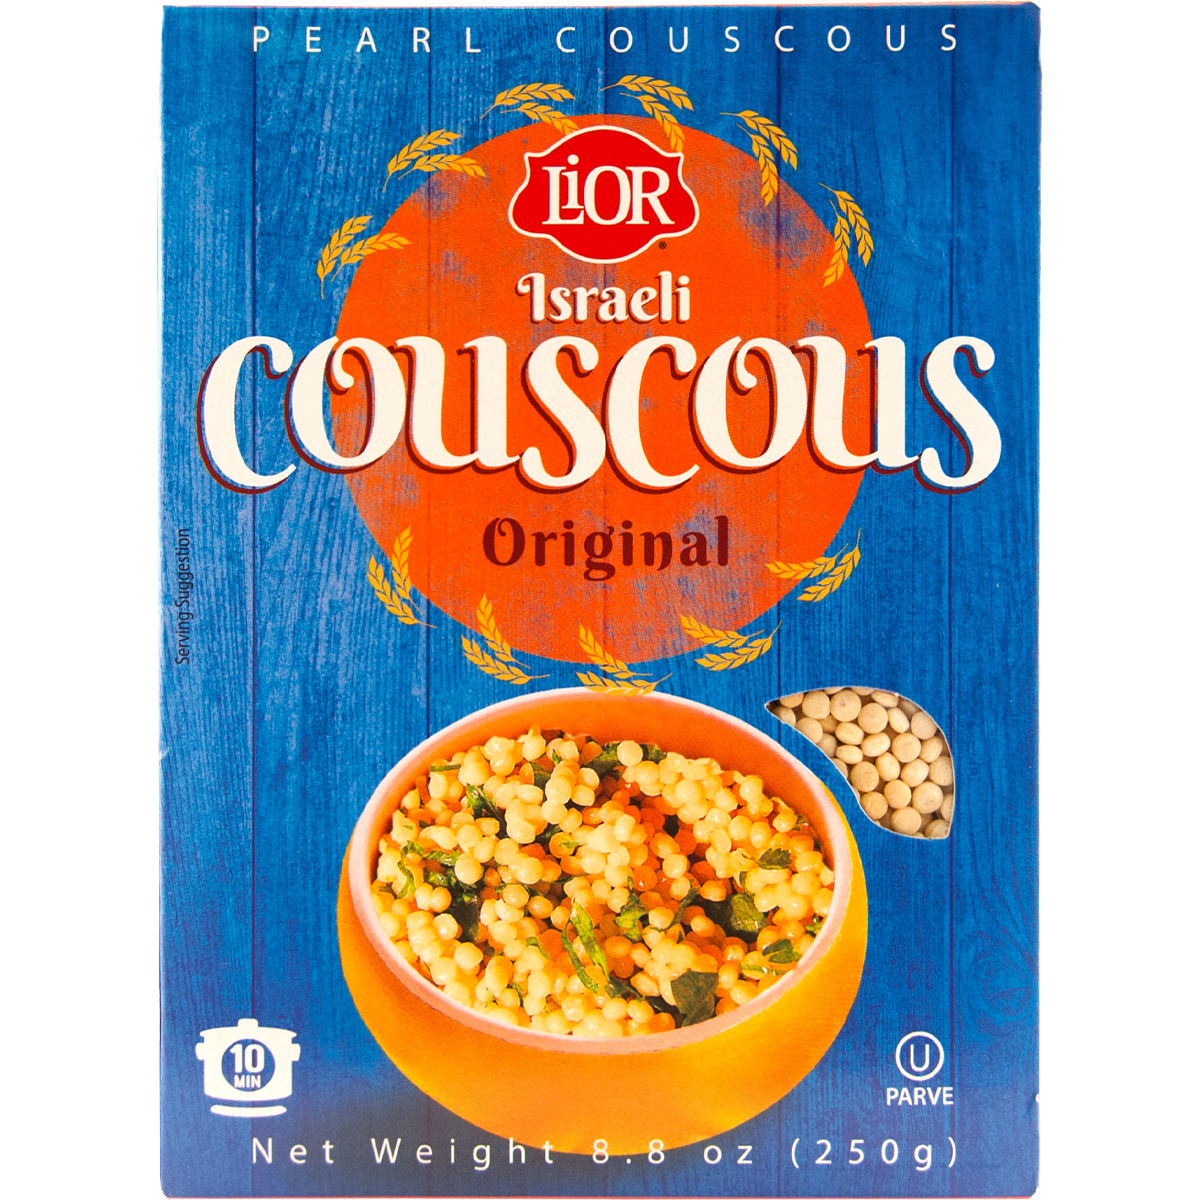 Israeli Couscous | Original | Box  | 8.8 oz | LiOR